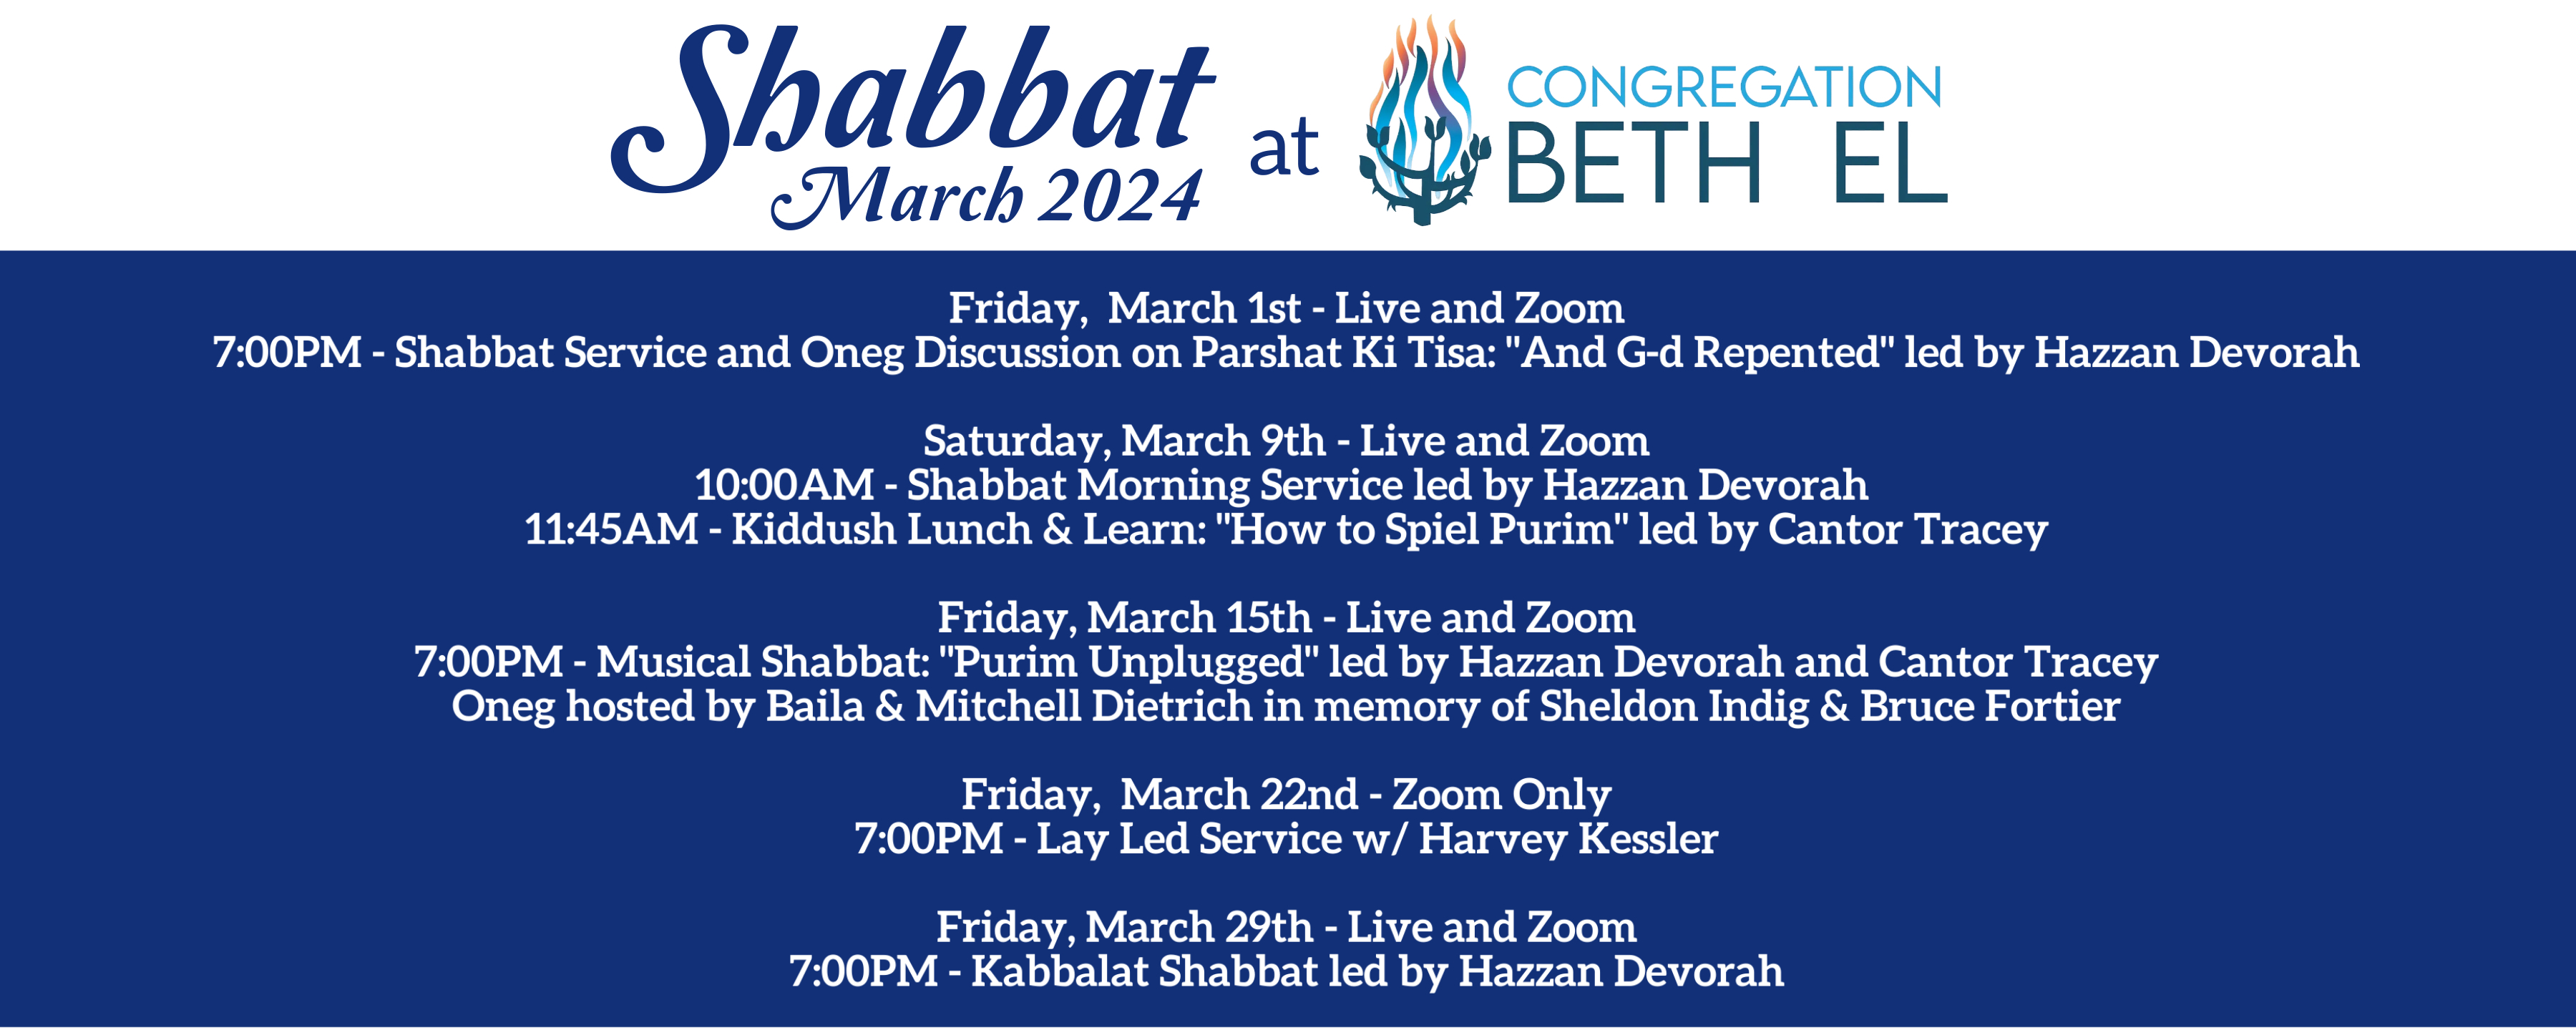 Shabbat 2